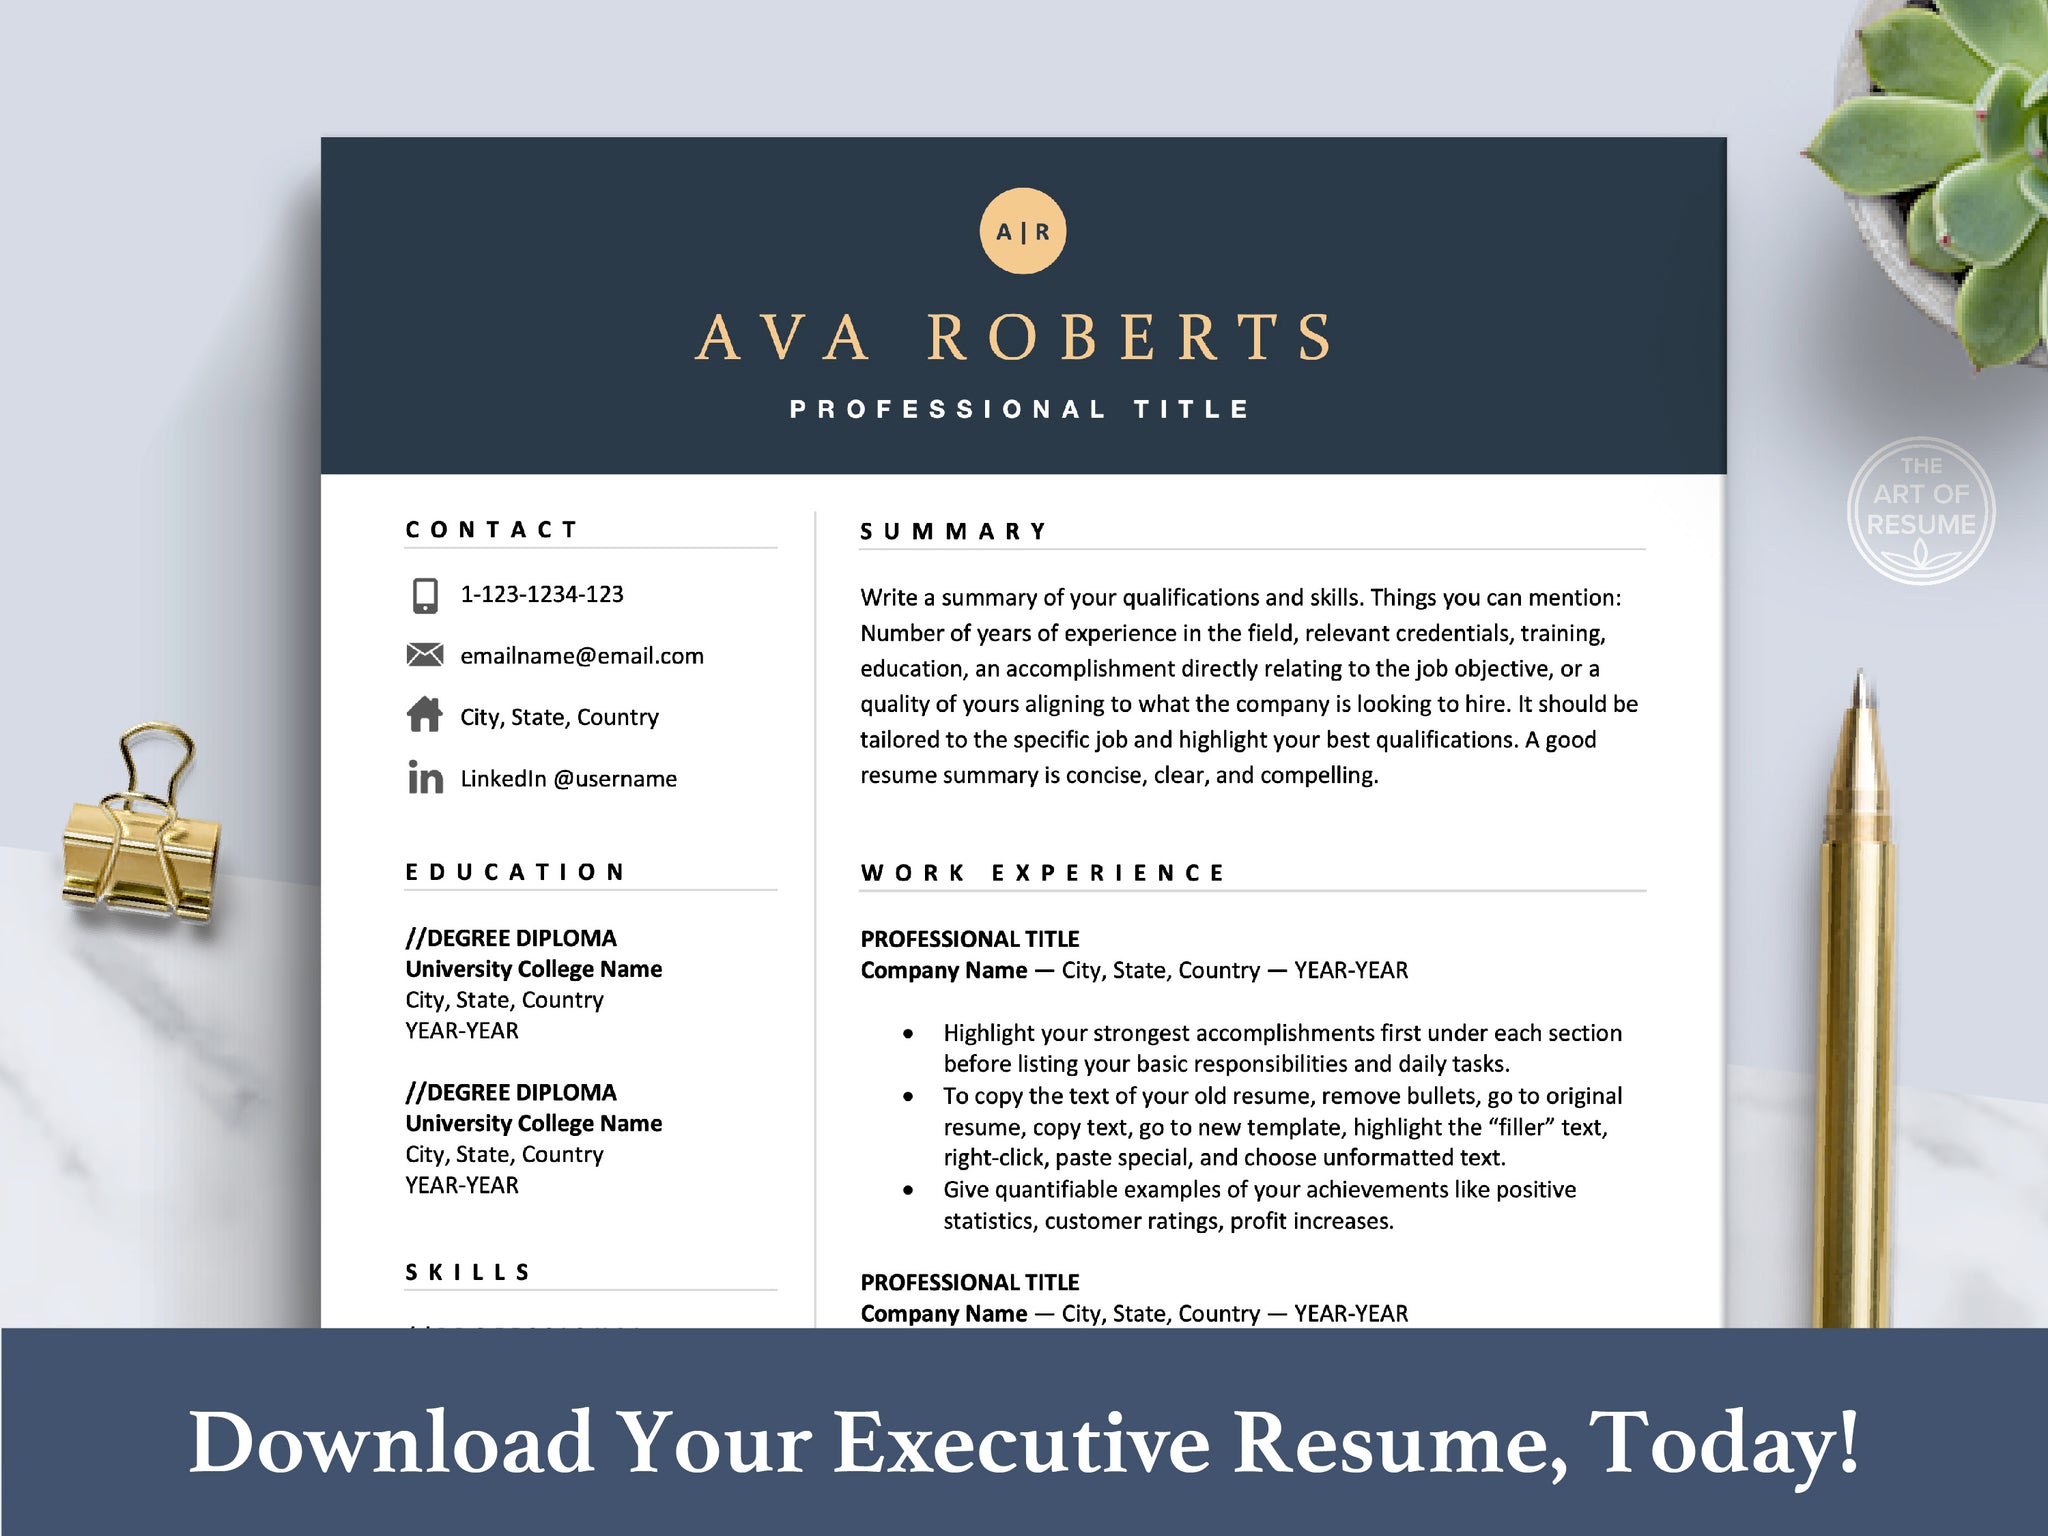 The Art of Resume | Executive Professional Resume Template Design